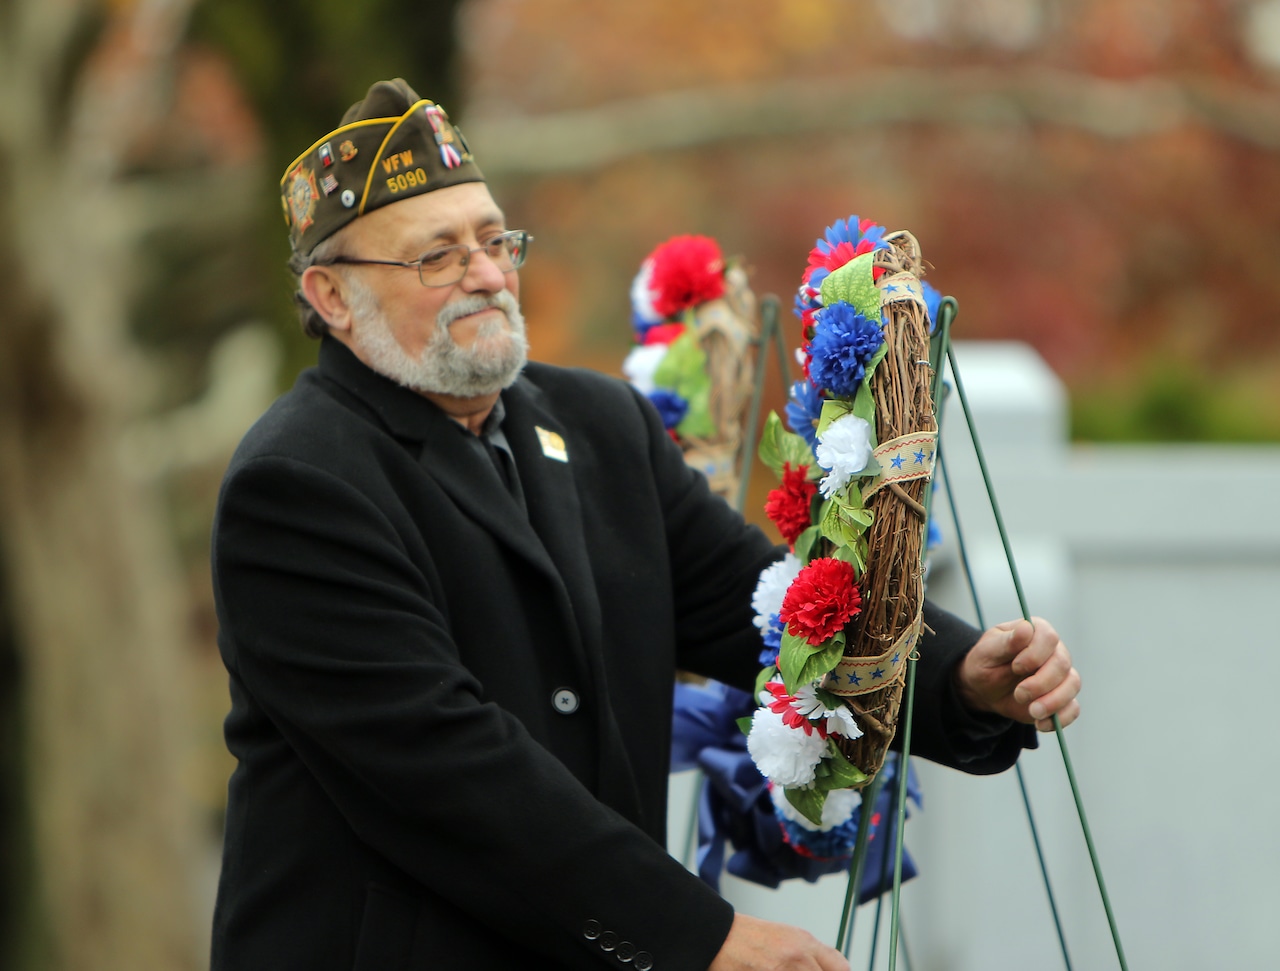 Staunch Staten Island veteran advocate Lee Covino honored at memorial service [Video]